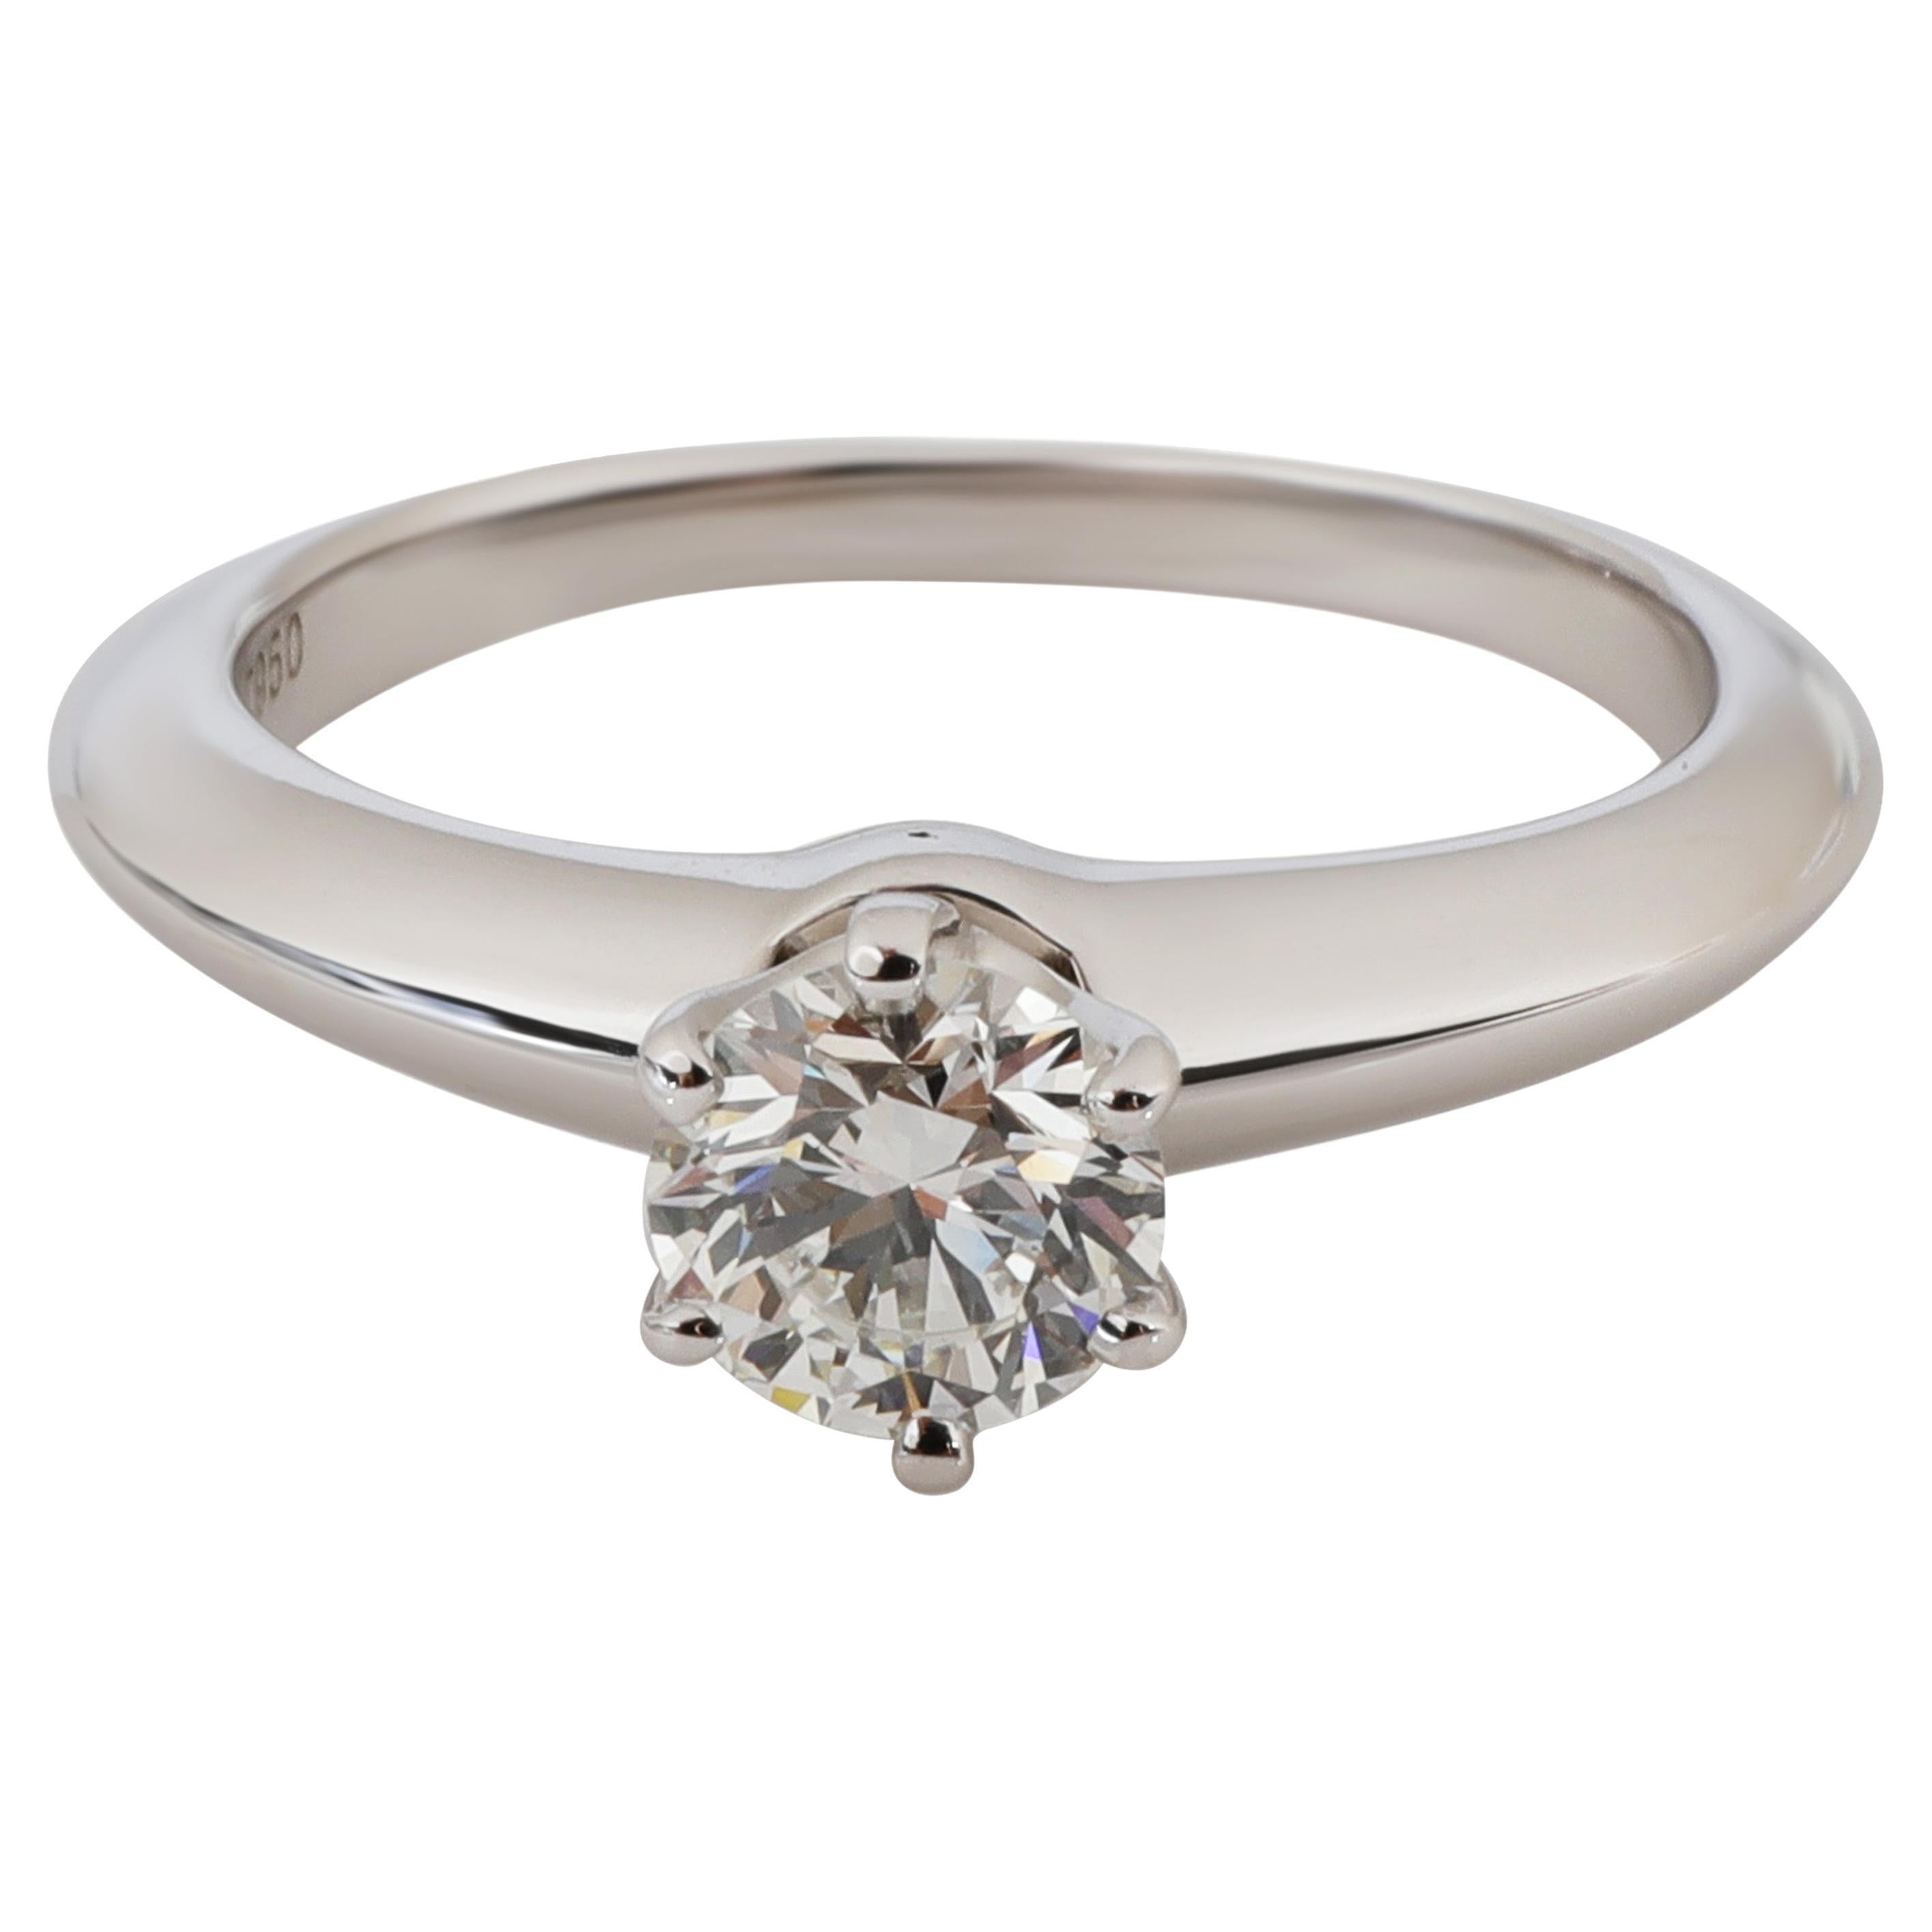 Tiffany & Co. Diamond Solitaire Engagement Ring in Platinum G VVS2 0.50 Carat